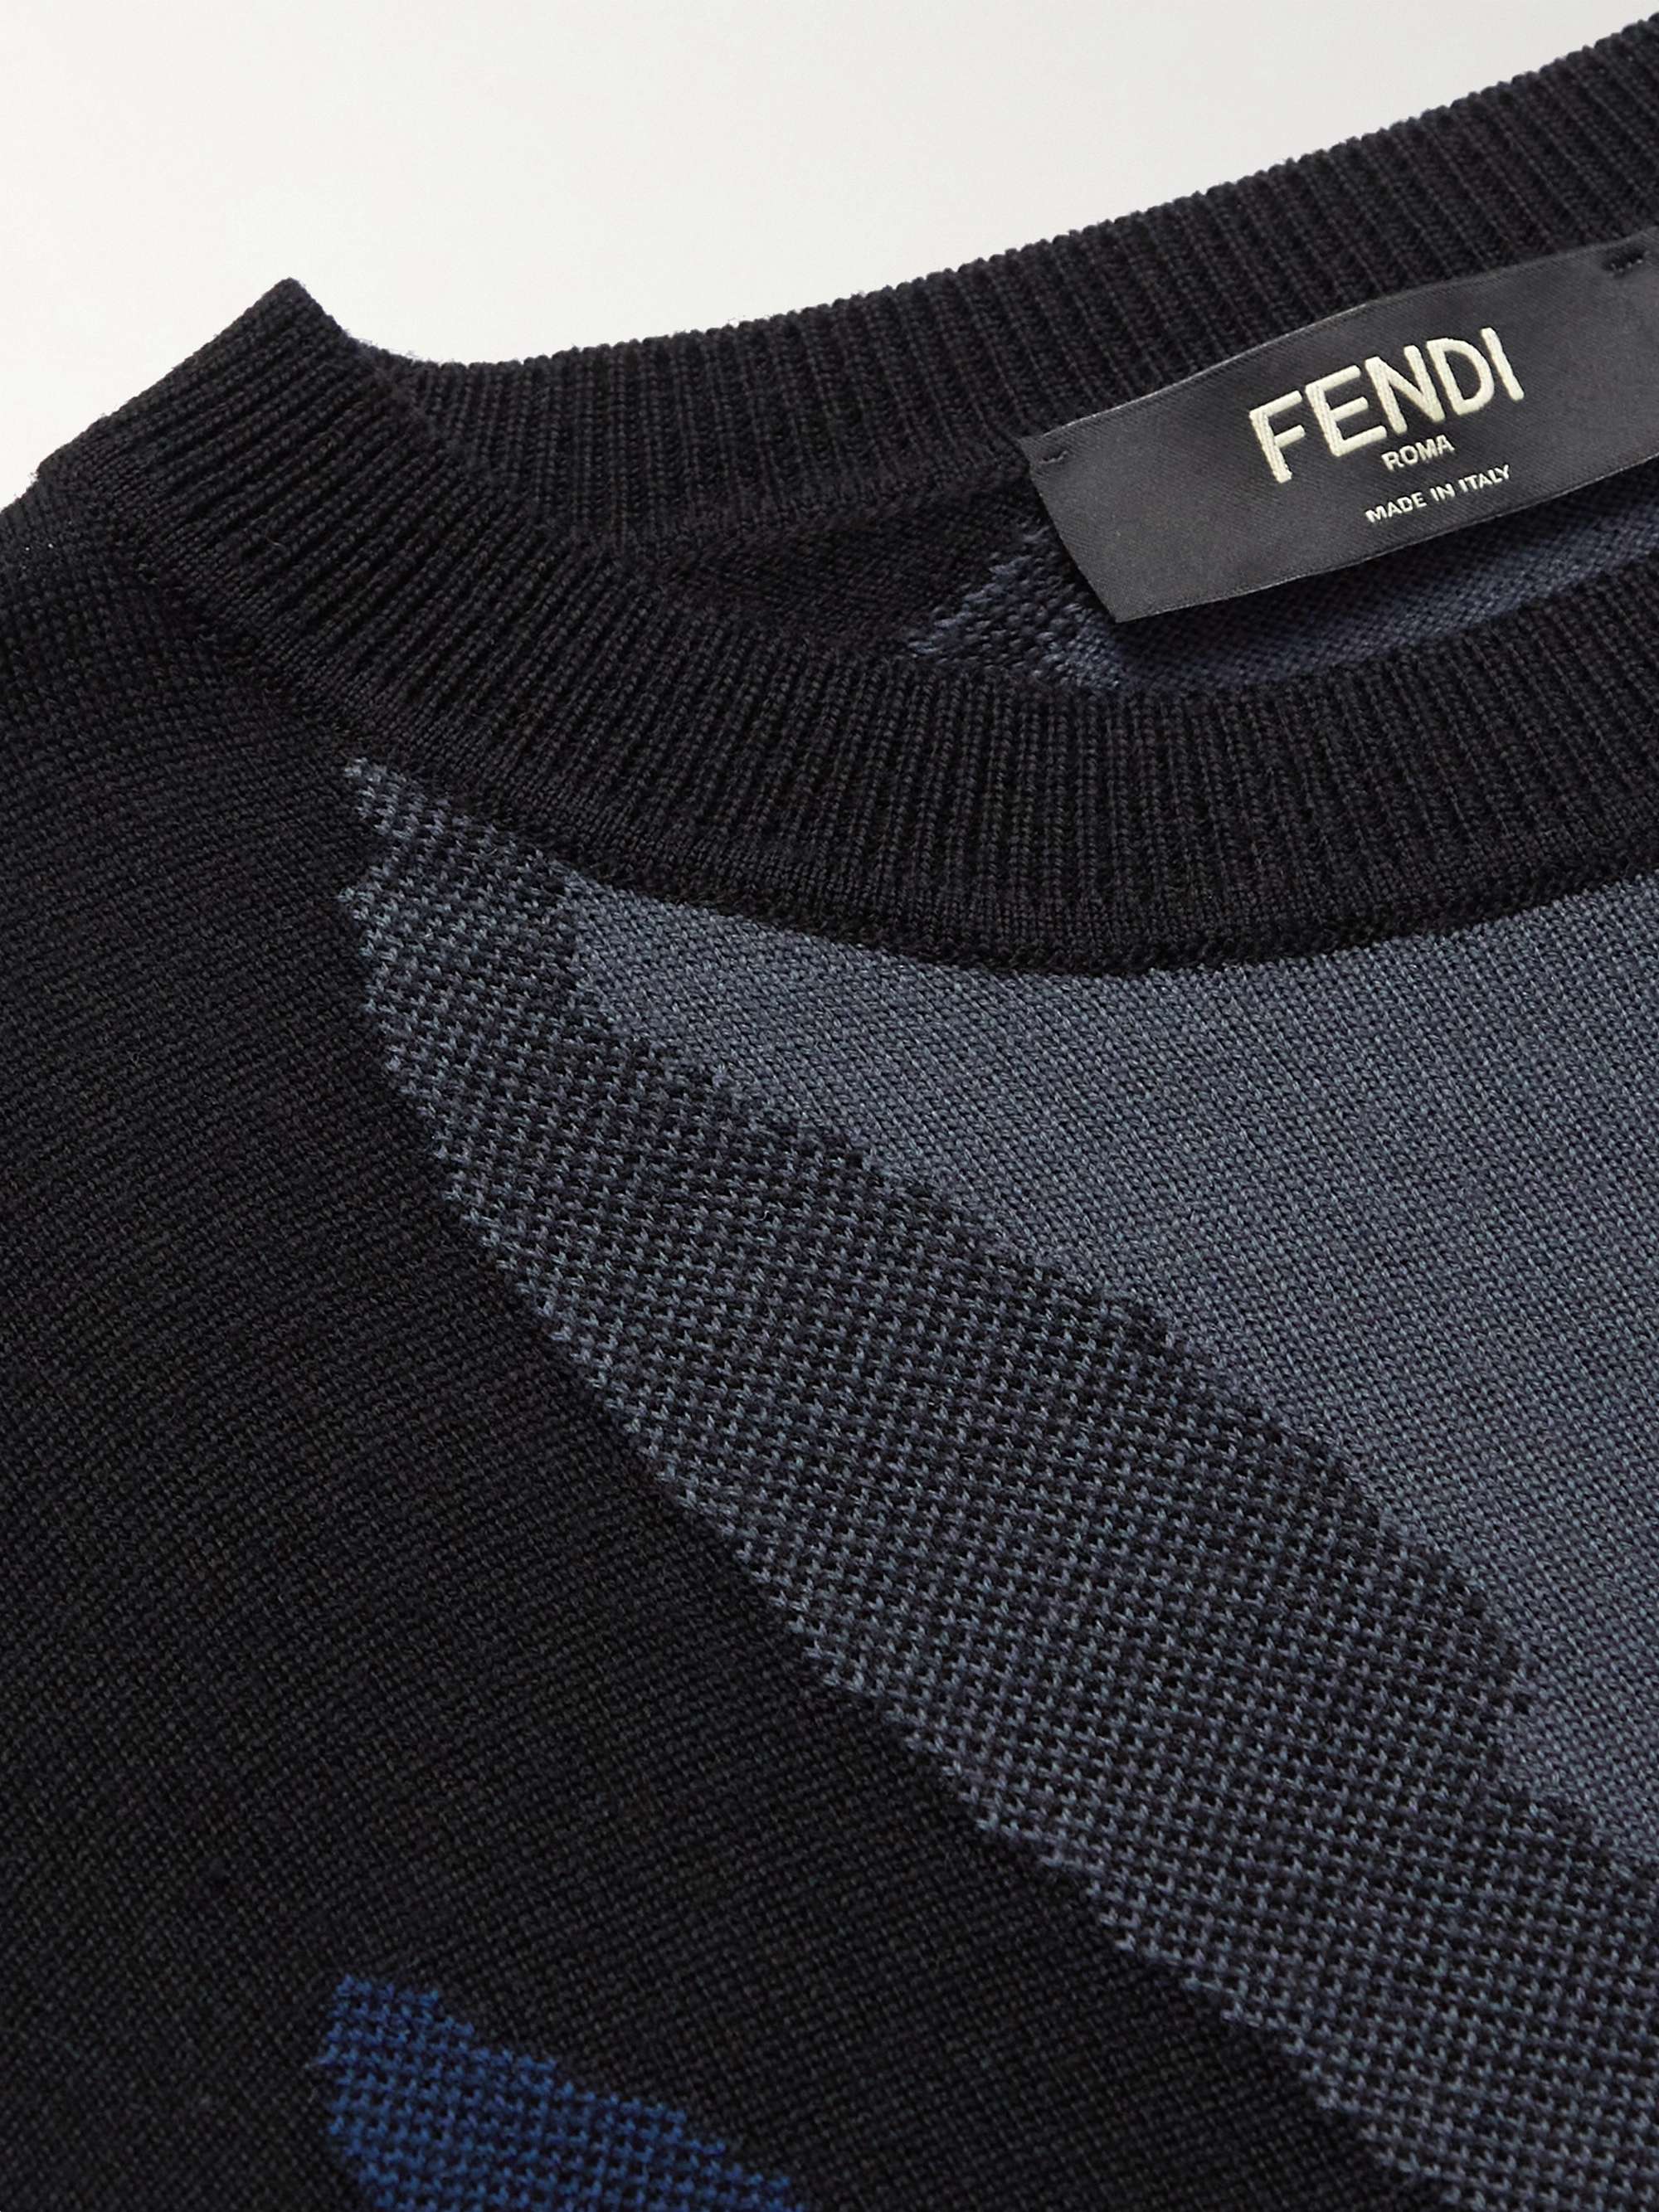 FENDI Cotton-Jacquard Sweater